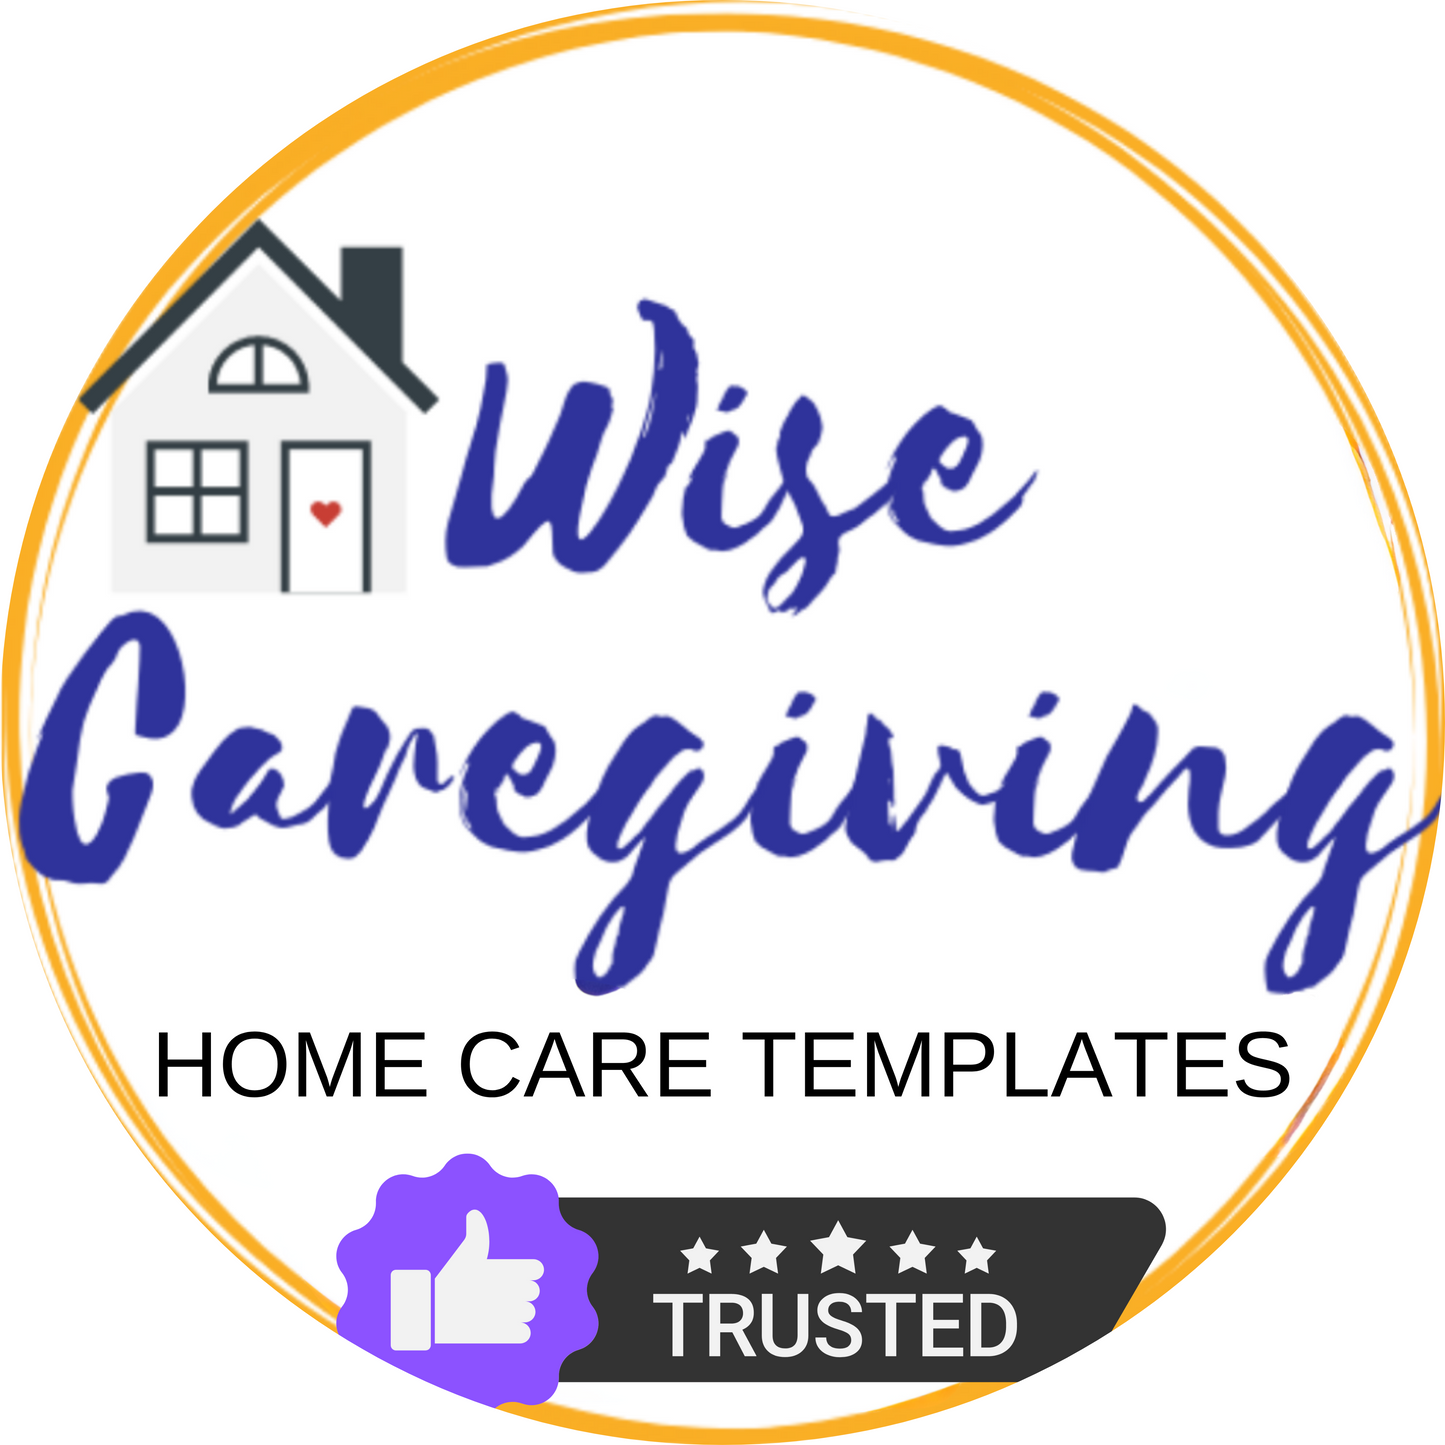 Caregiving Services Template